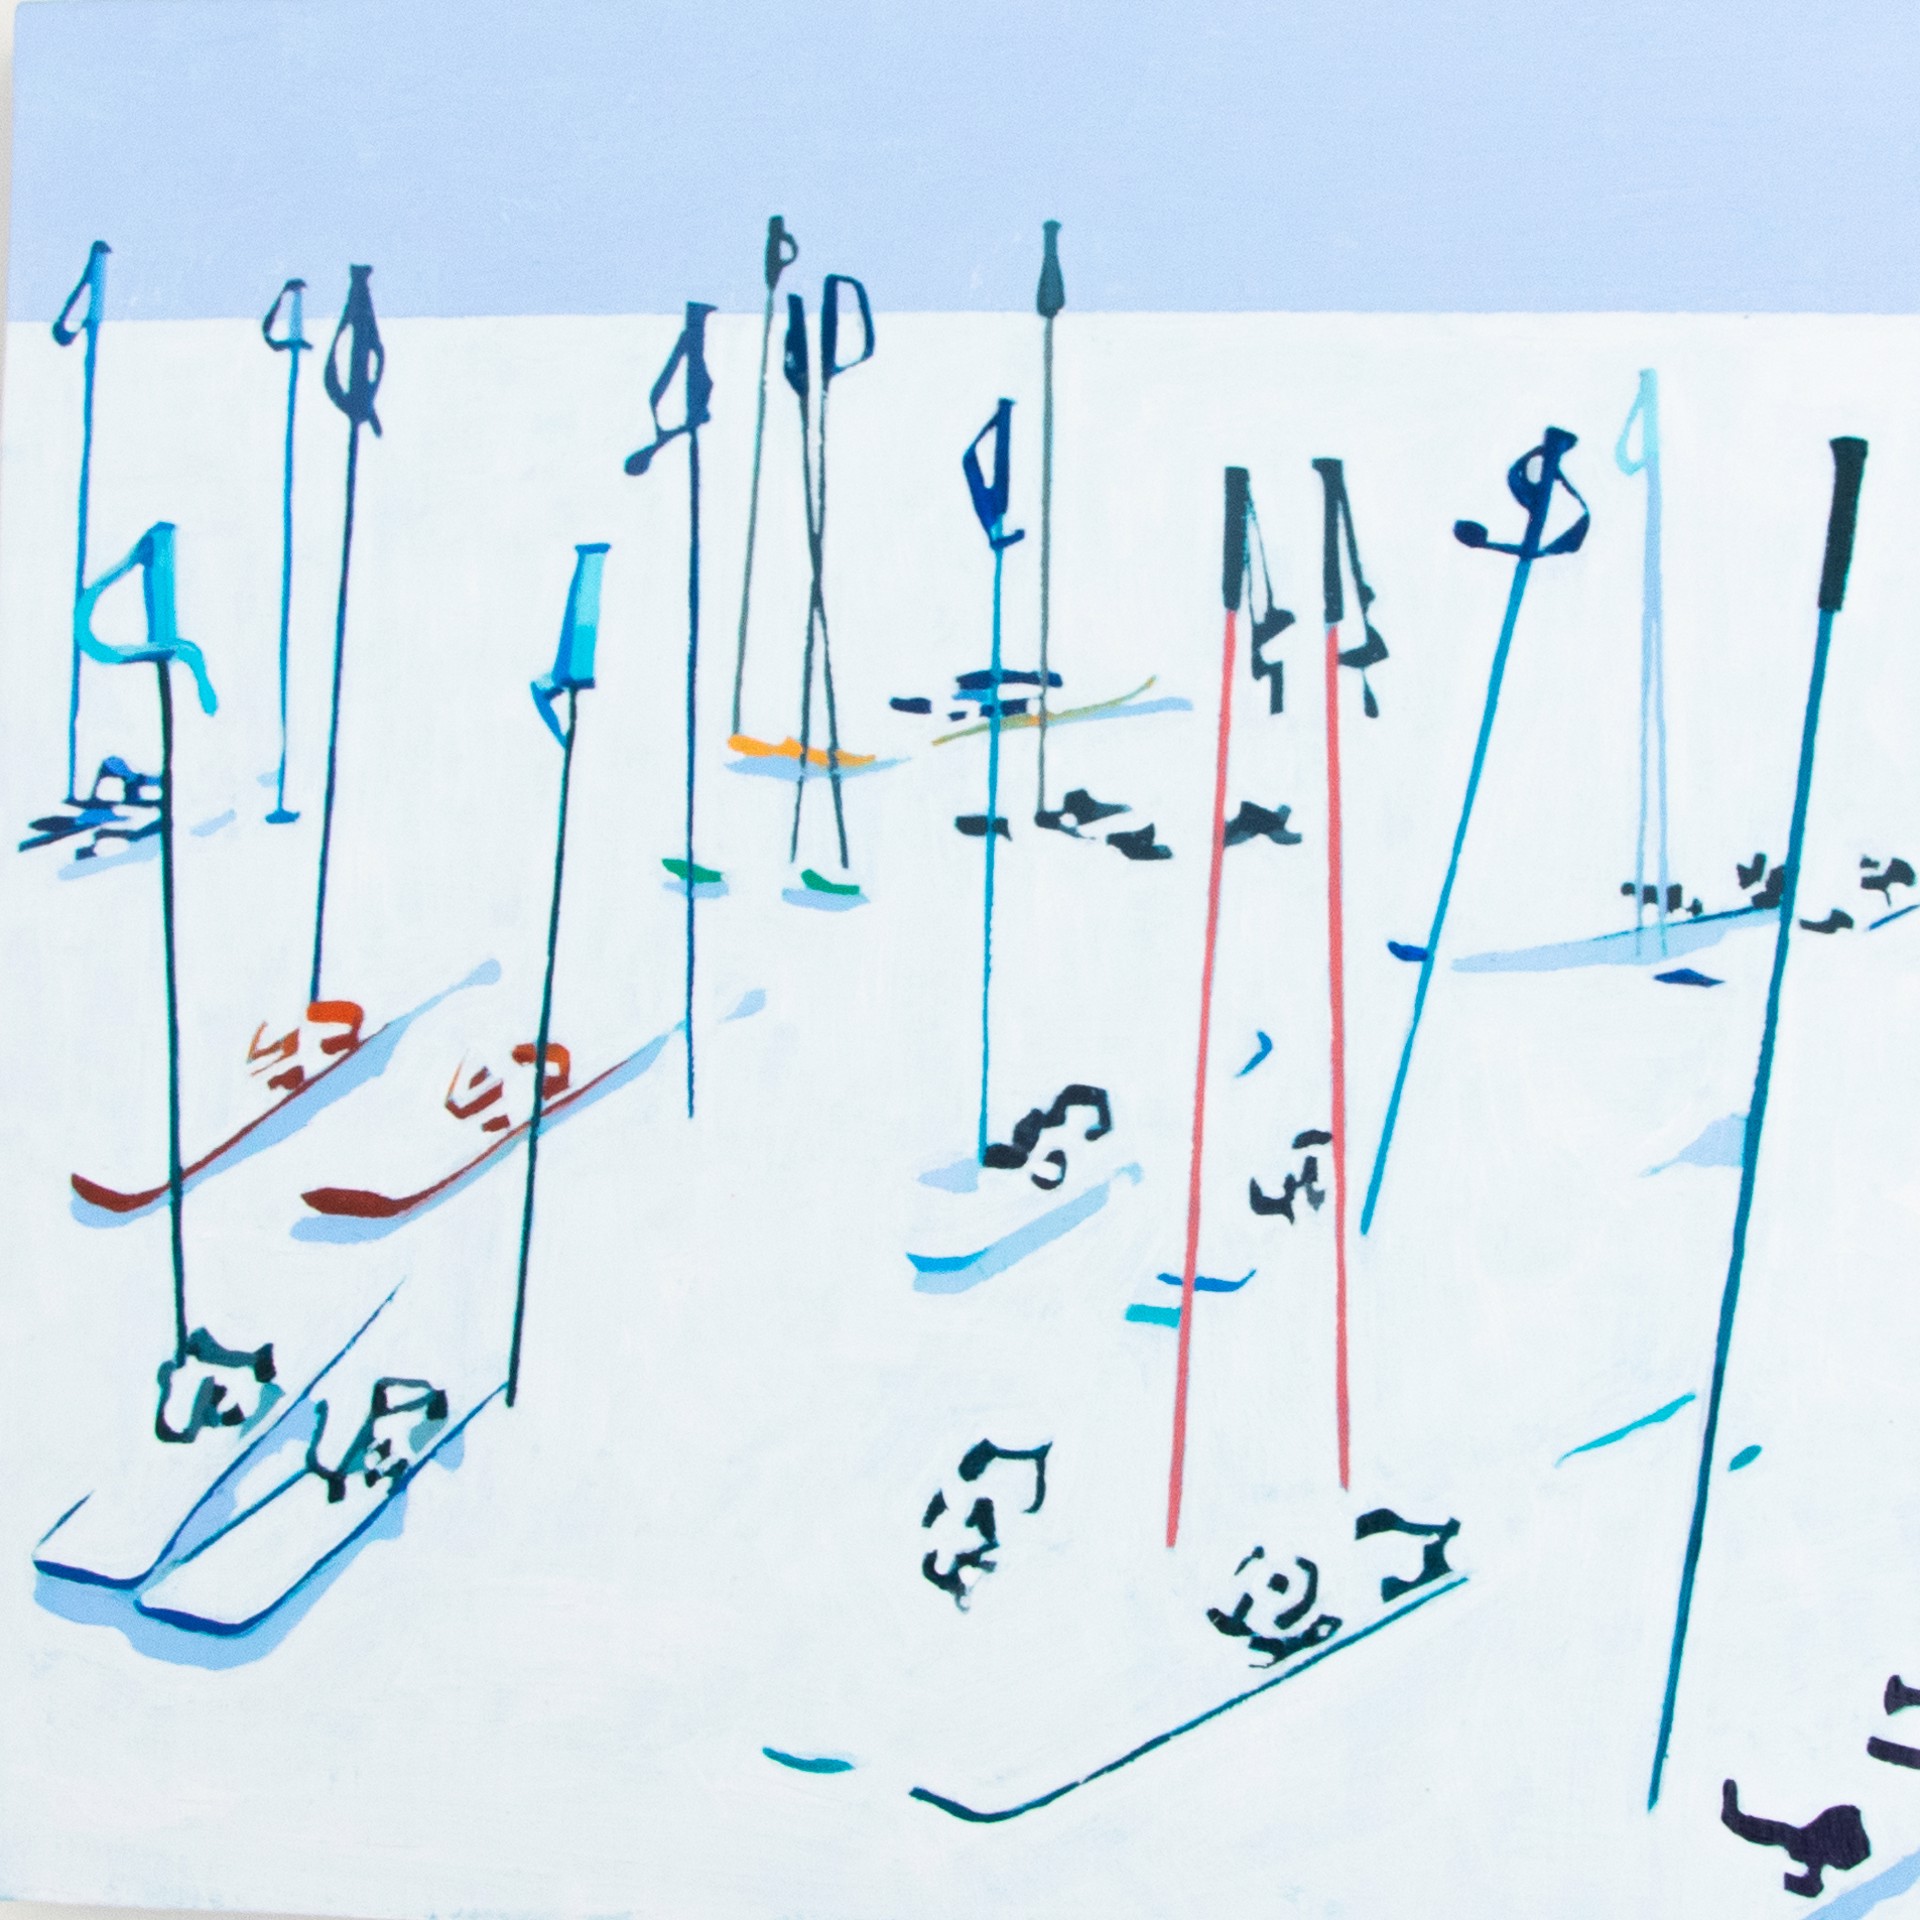 Powder Day, Skis on Ground by Berkeley Hoerr